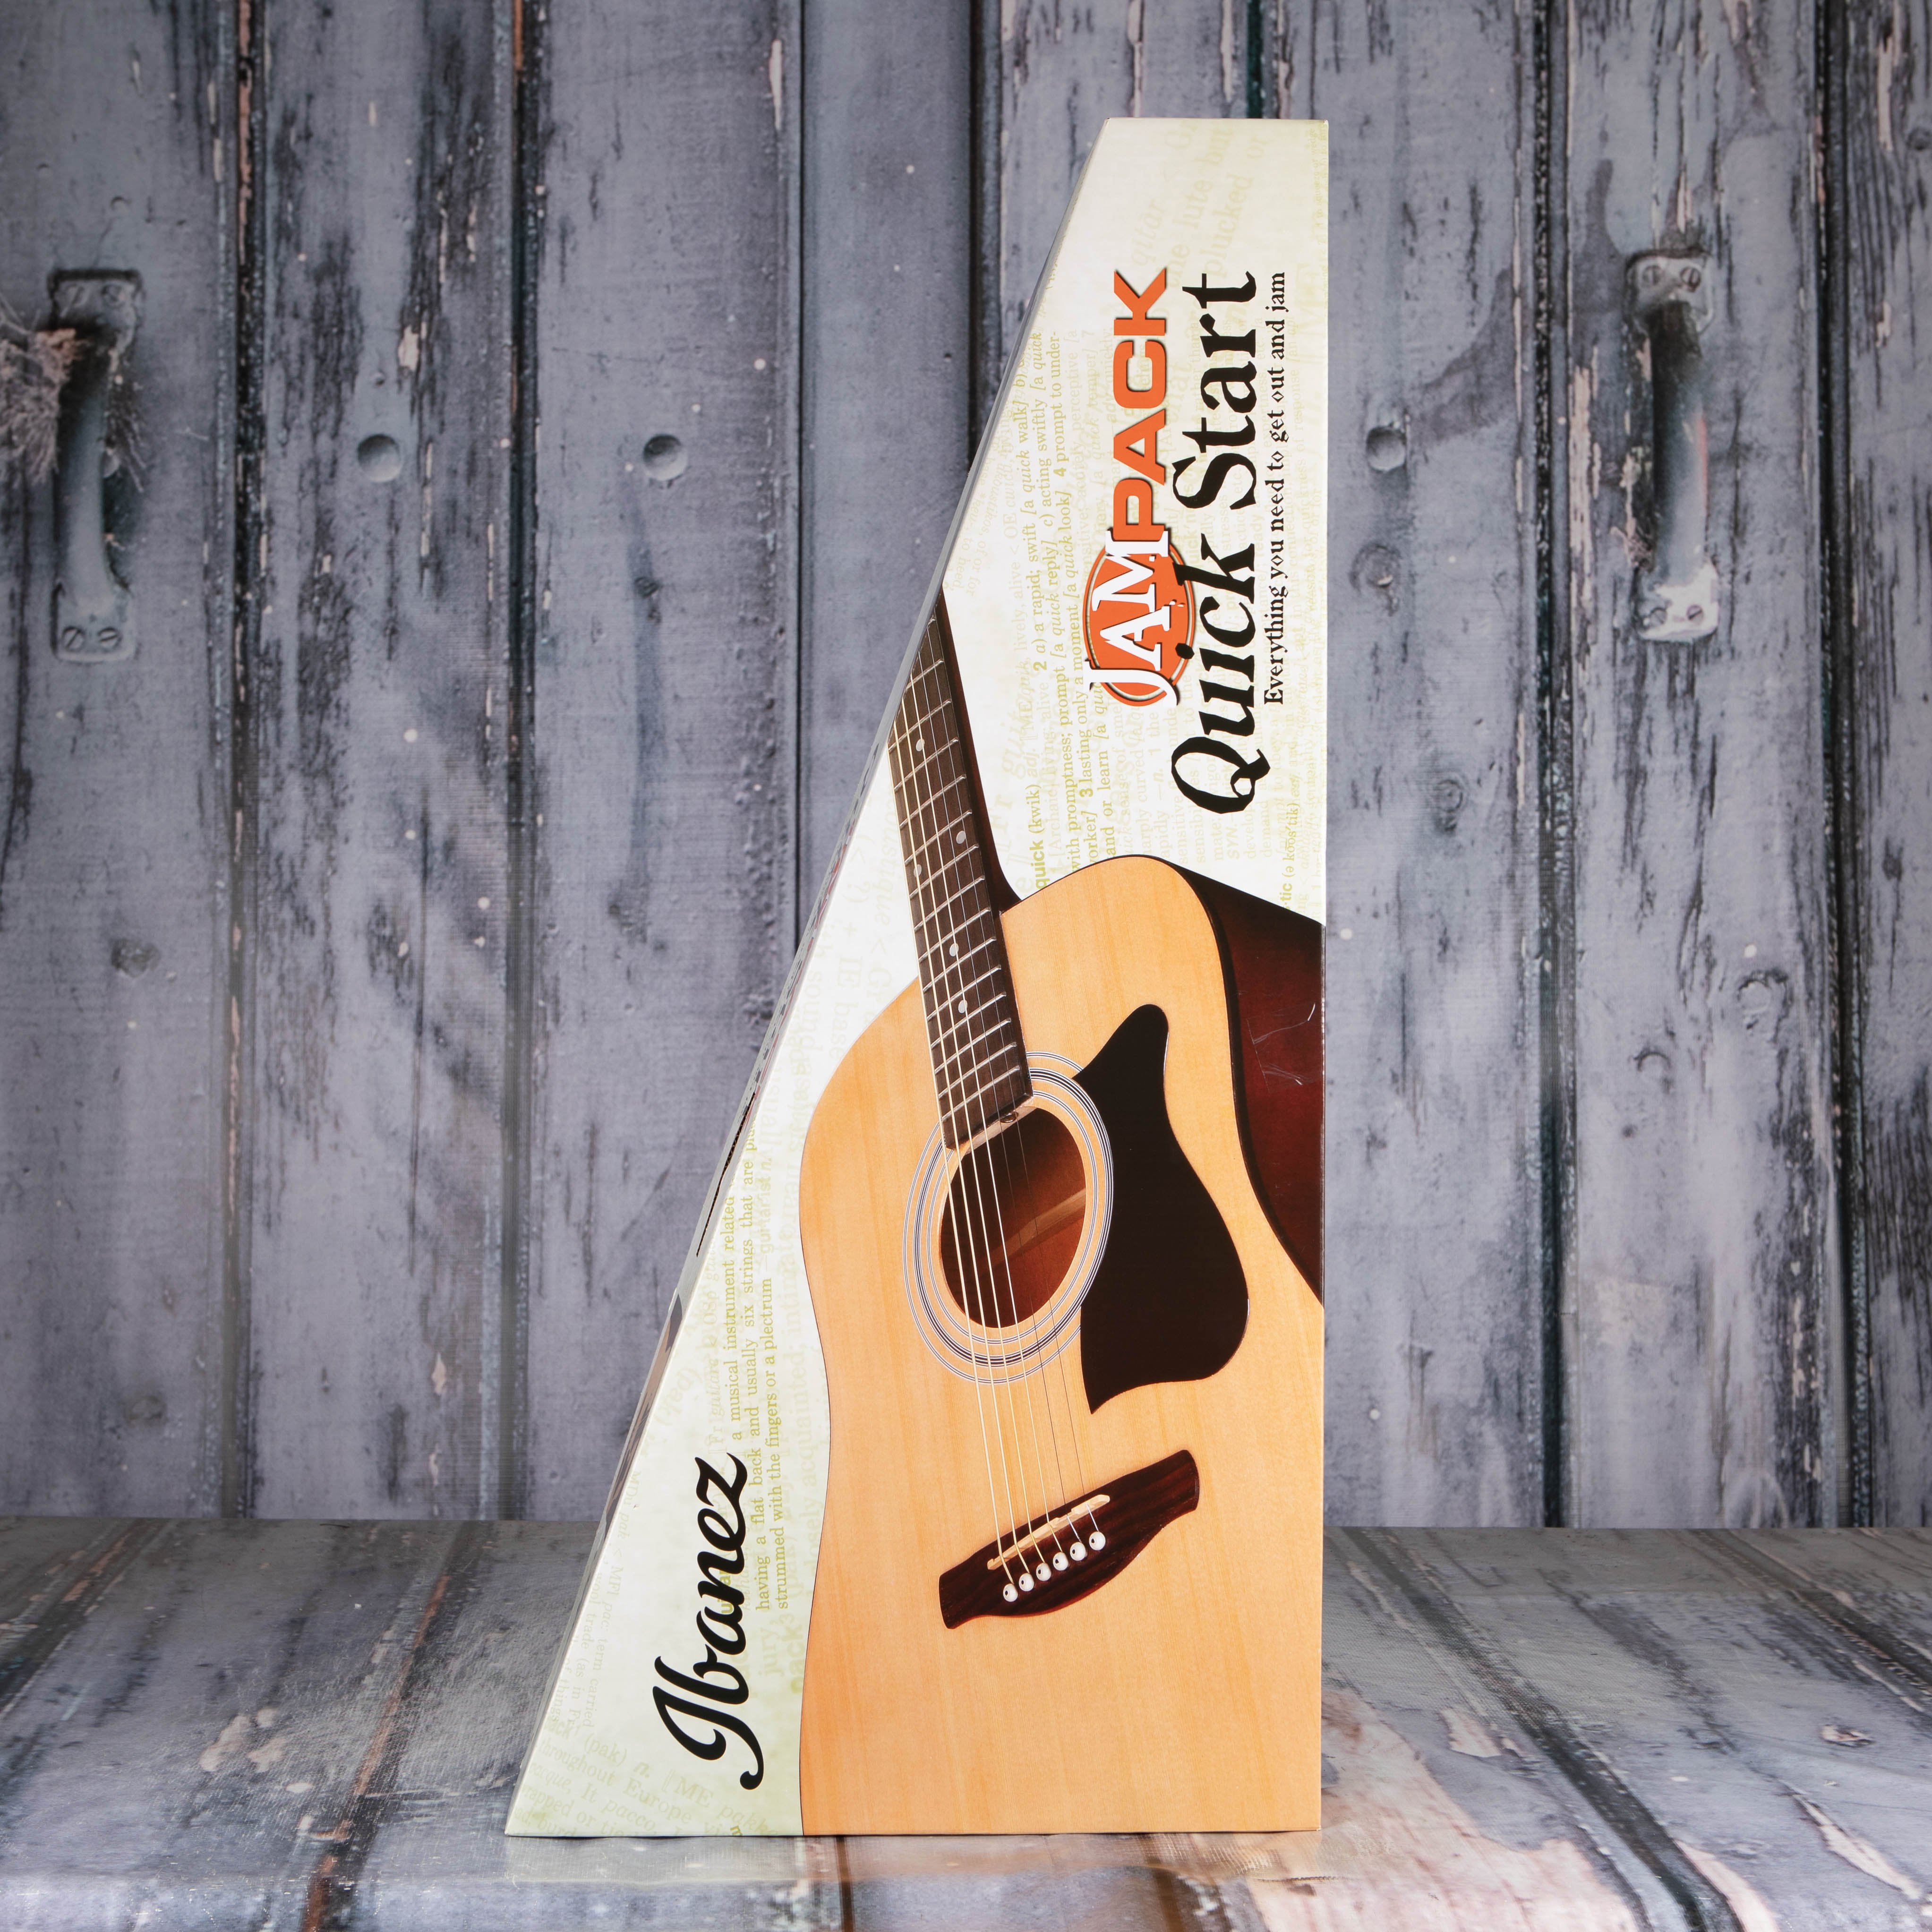 Ibanez IJV50 Dreadnought Jam Pack Acoustic Guitar, Natural High Gloss, box